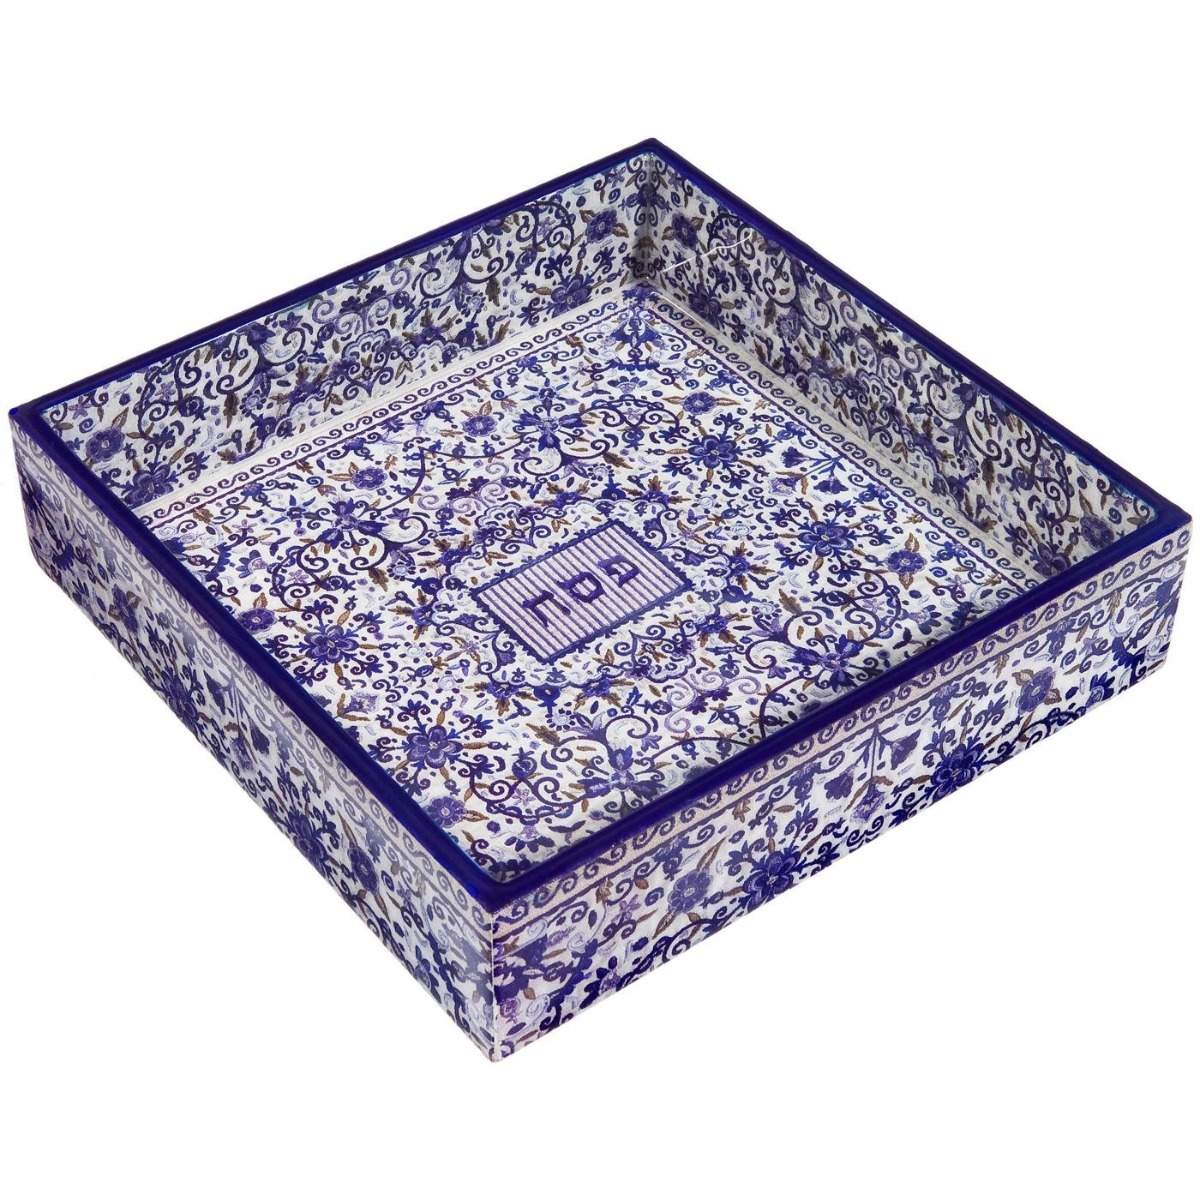 Yair Emanuel Wooden Matzah Tray With Floral Motif (Blue) - 1